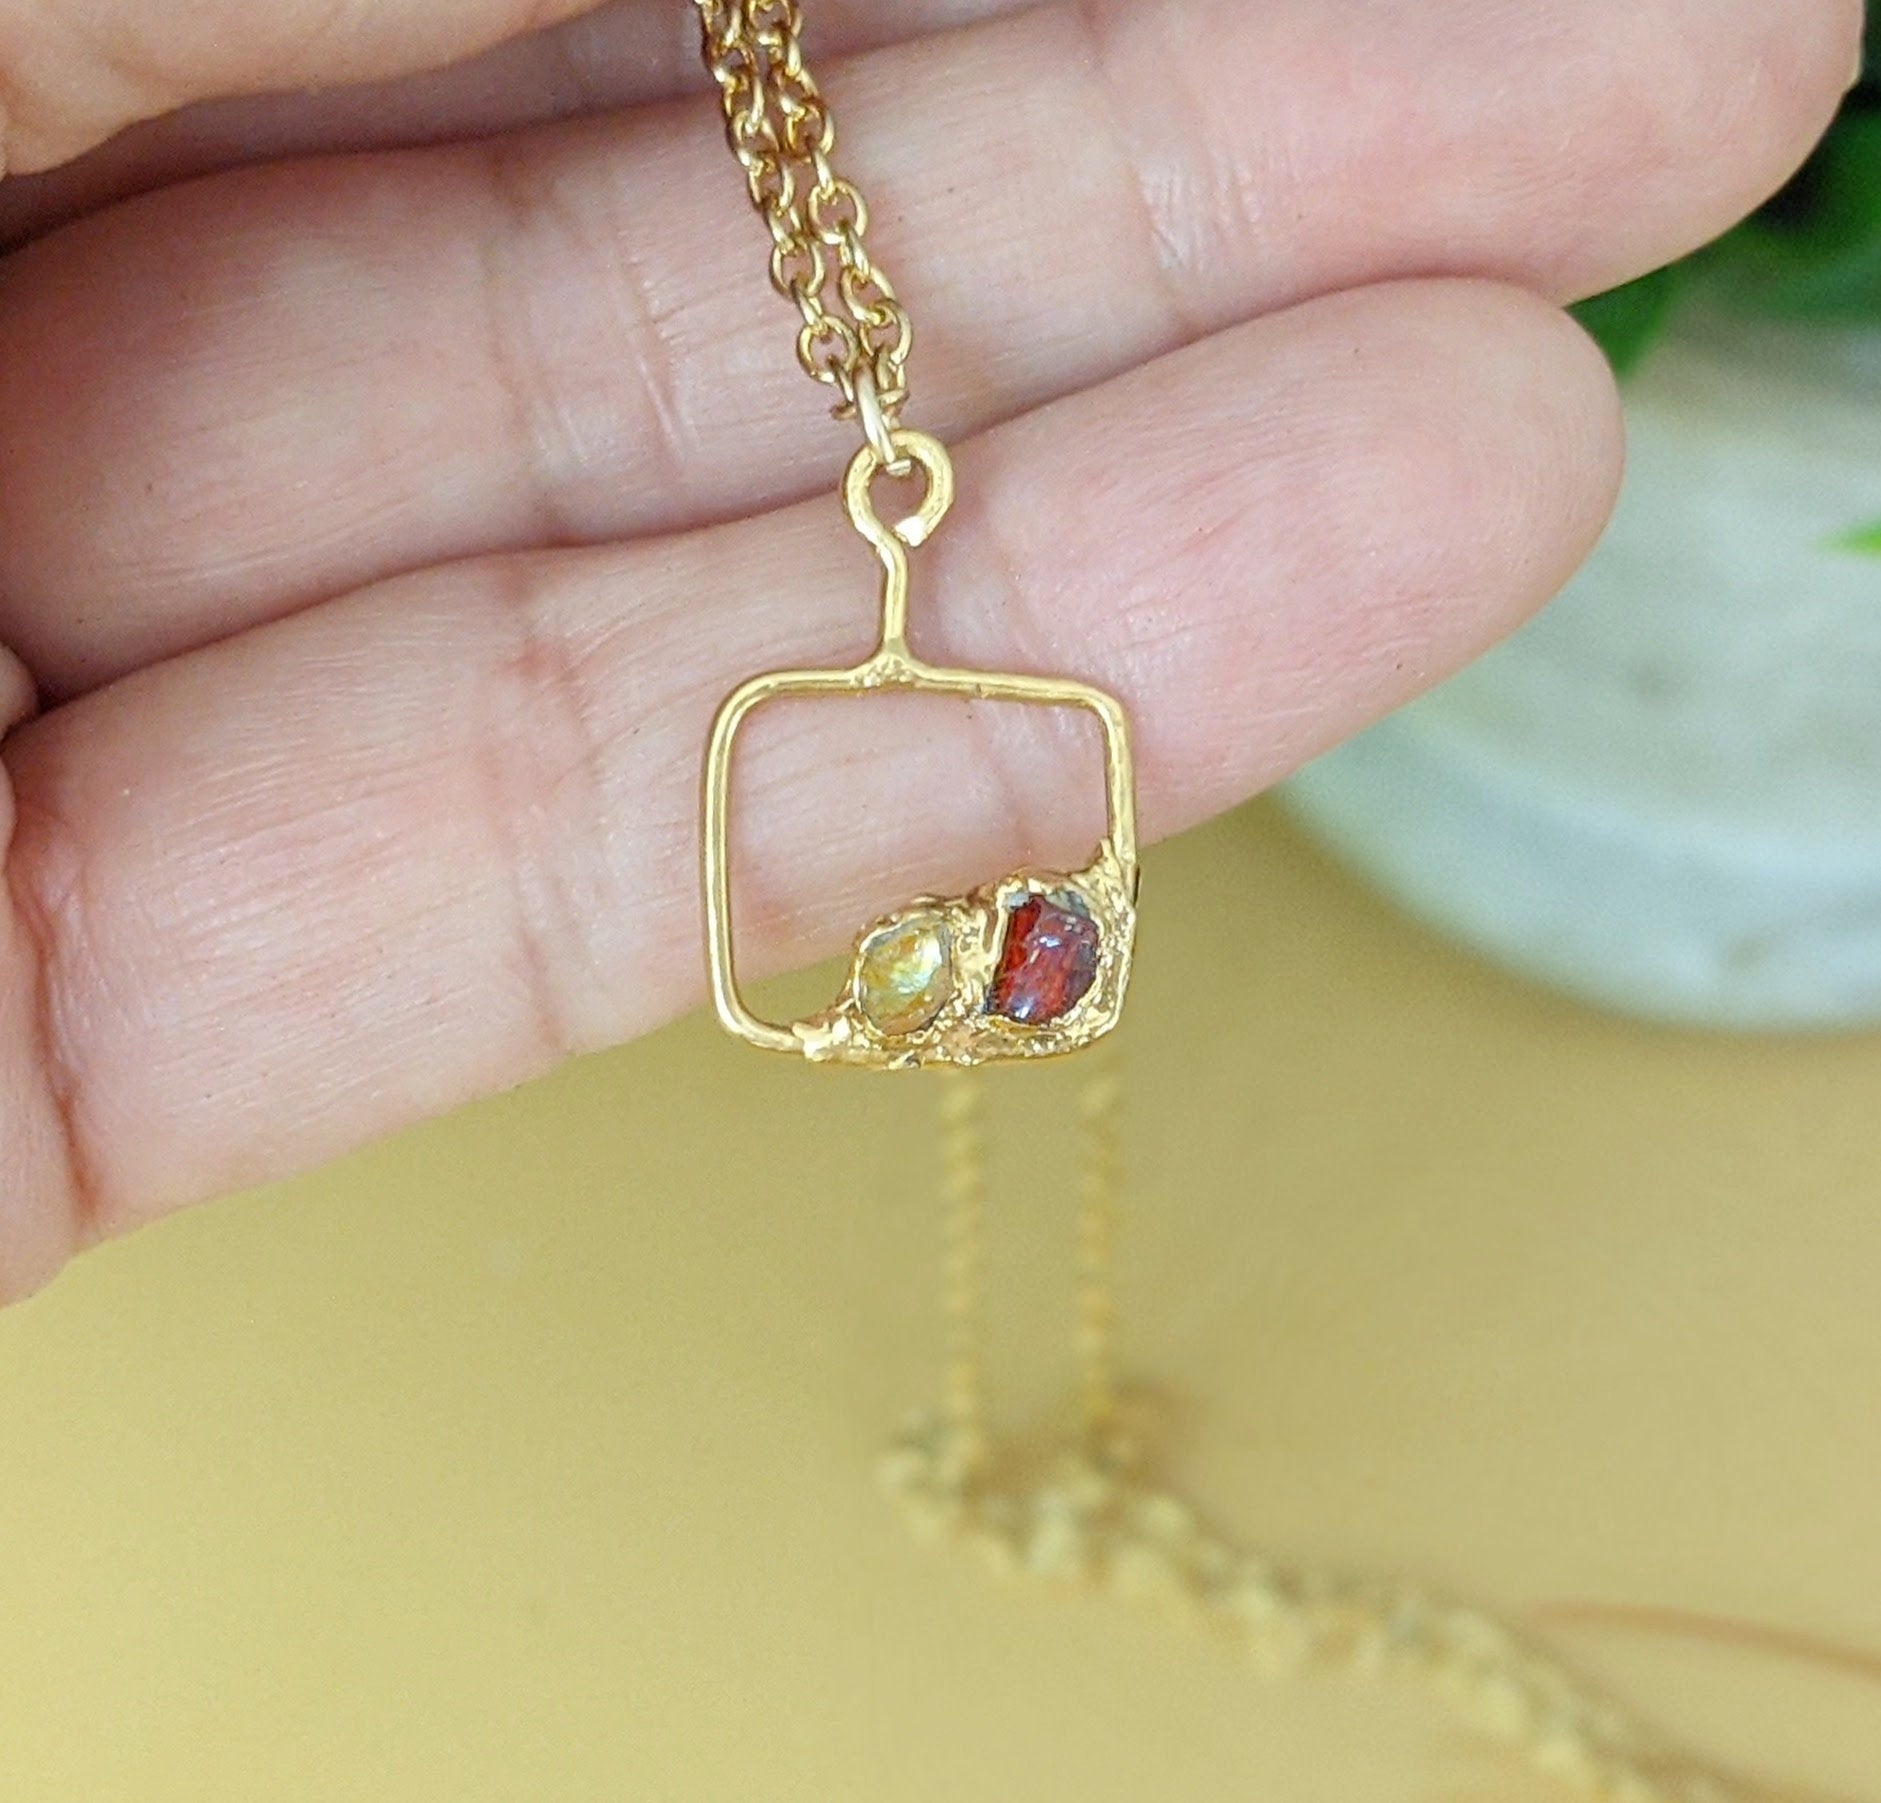 Unique 2-stone Personalized Family Birthstone necklace in unique 18k Gold setting